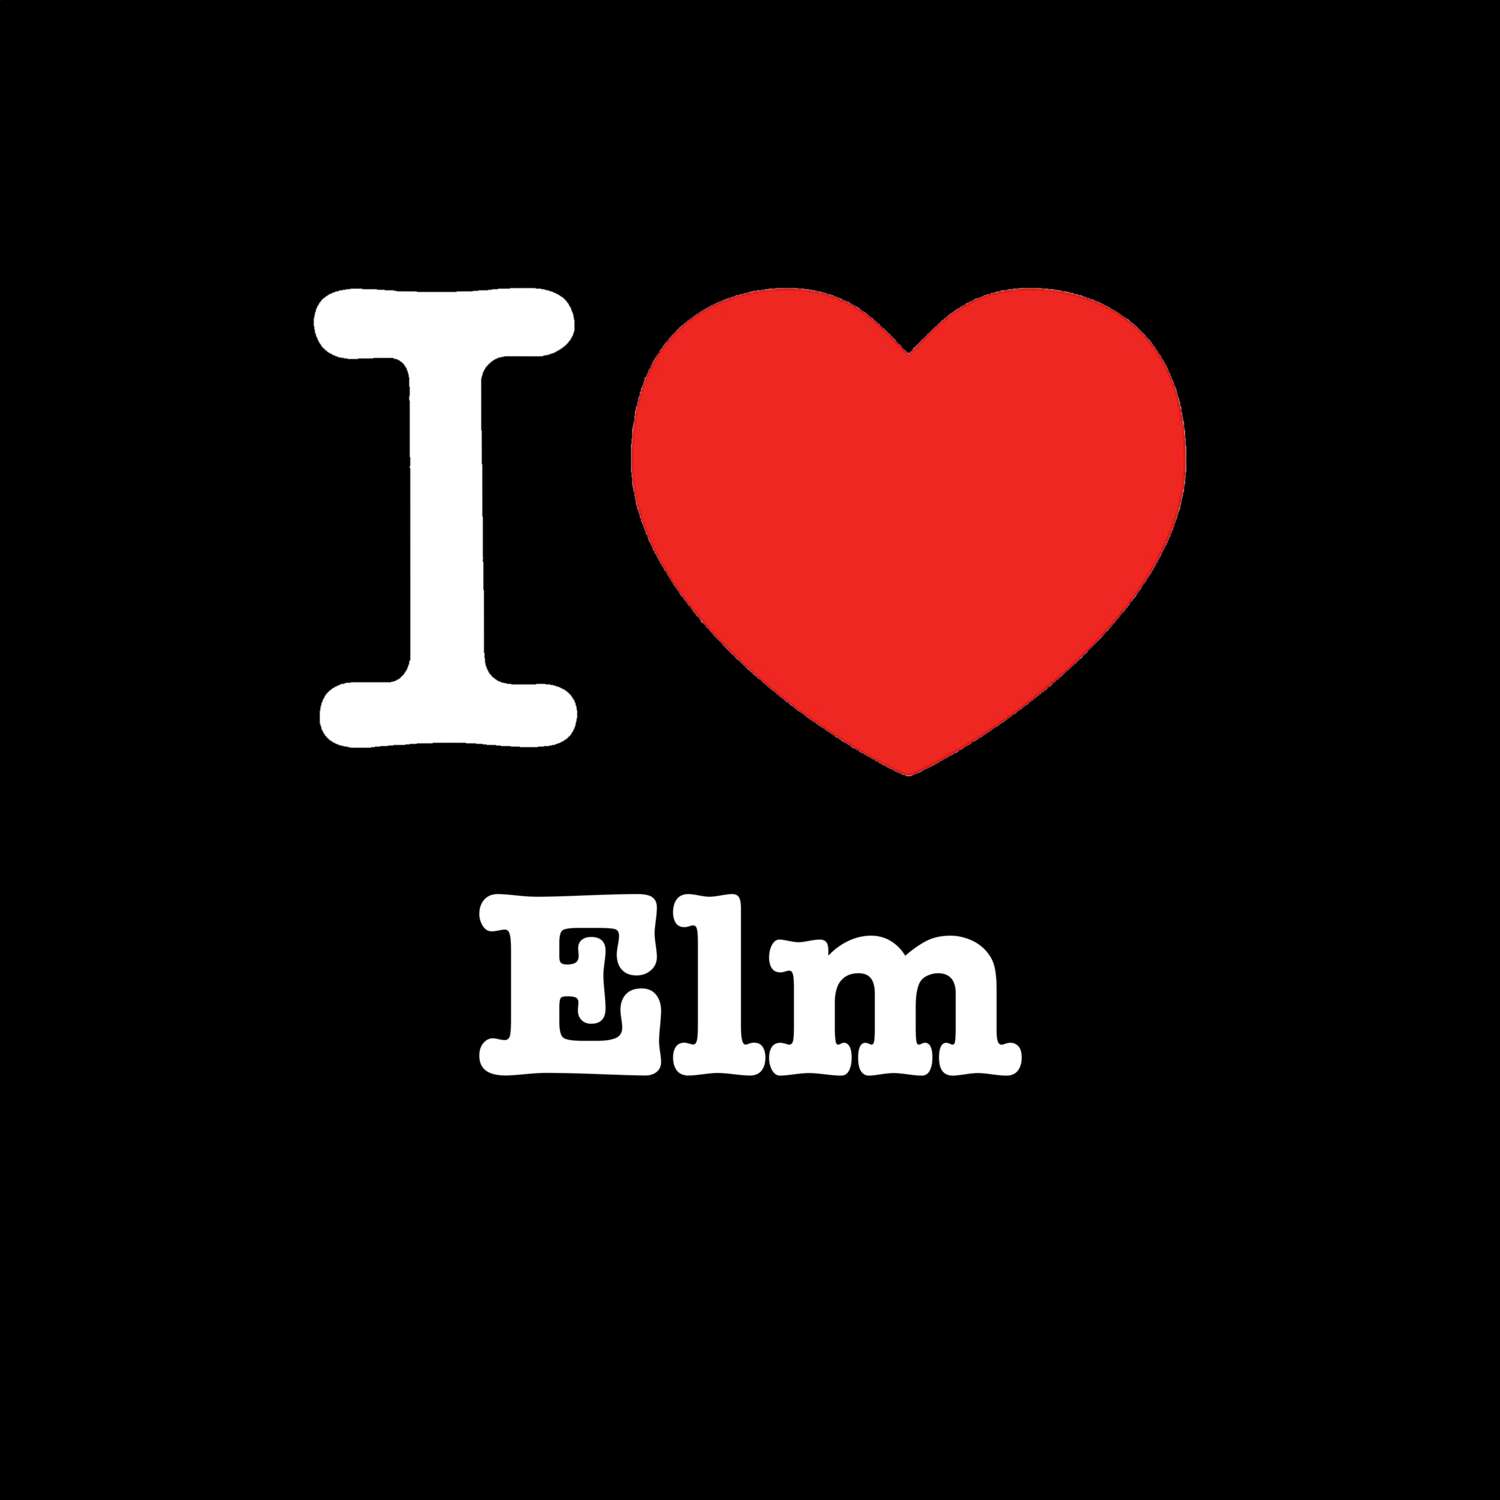 Elm T-Shirt »I love«